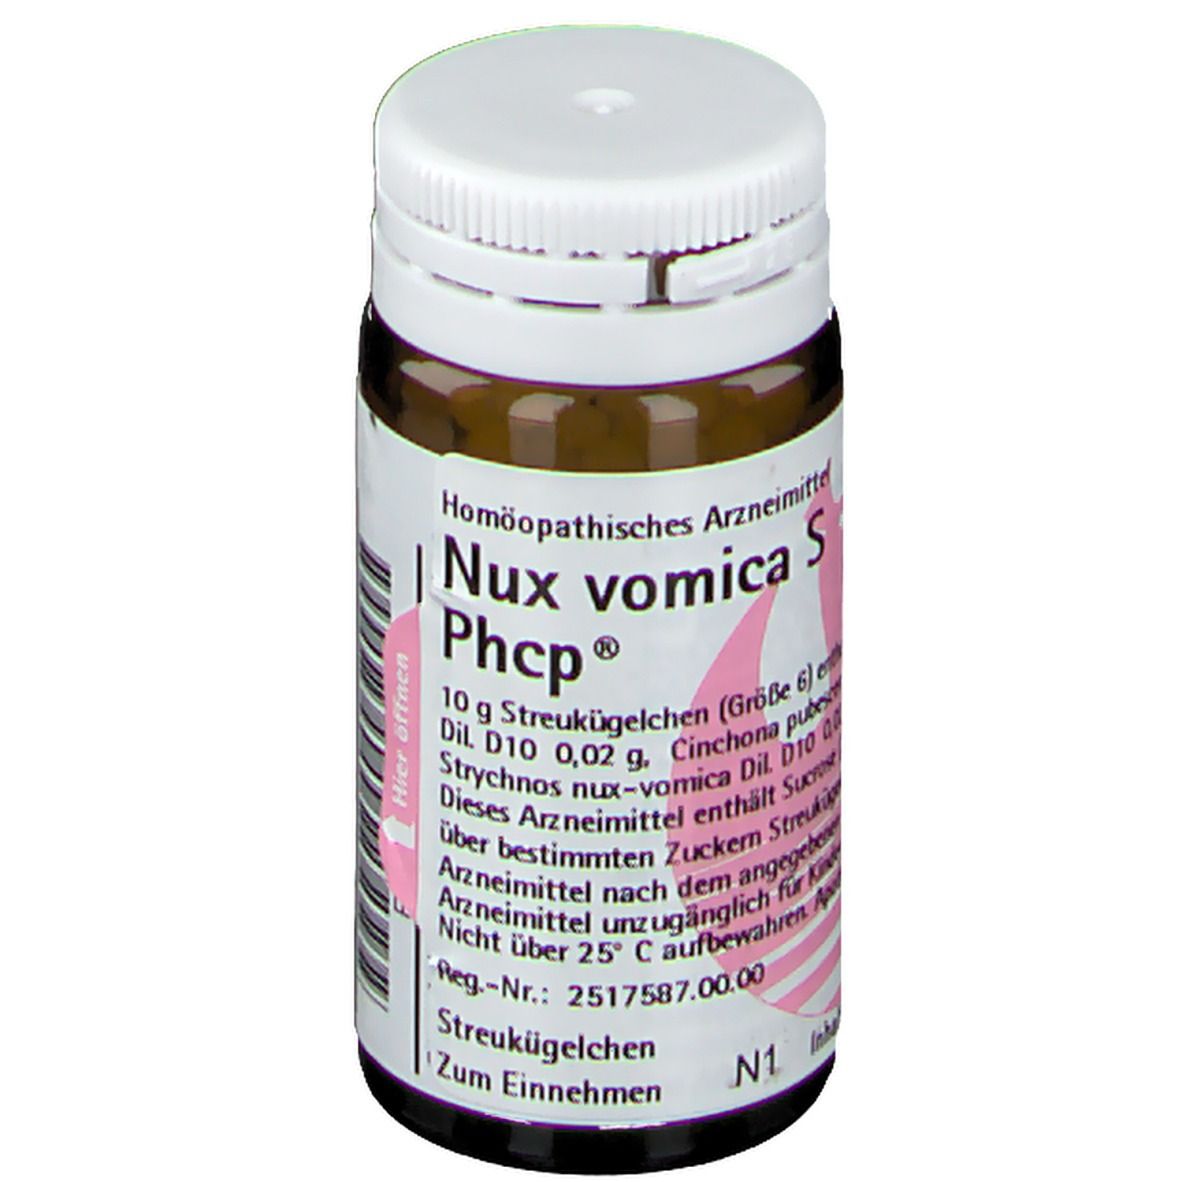 PHÖNIX® Nux vomica S Phcp®